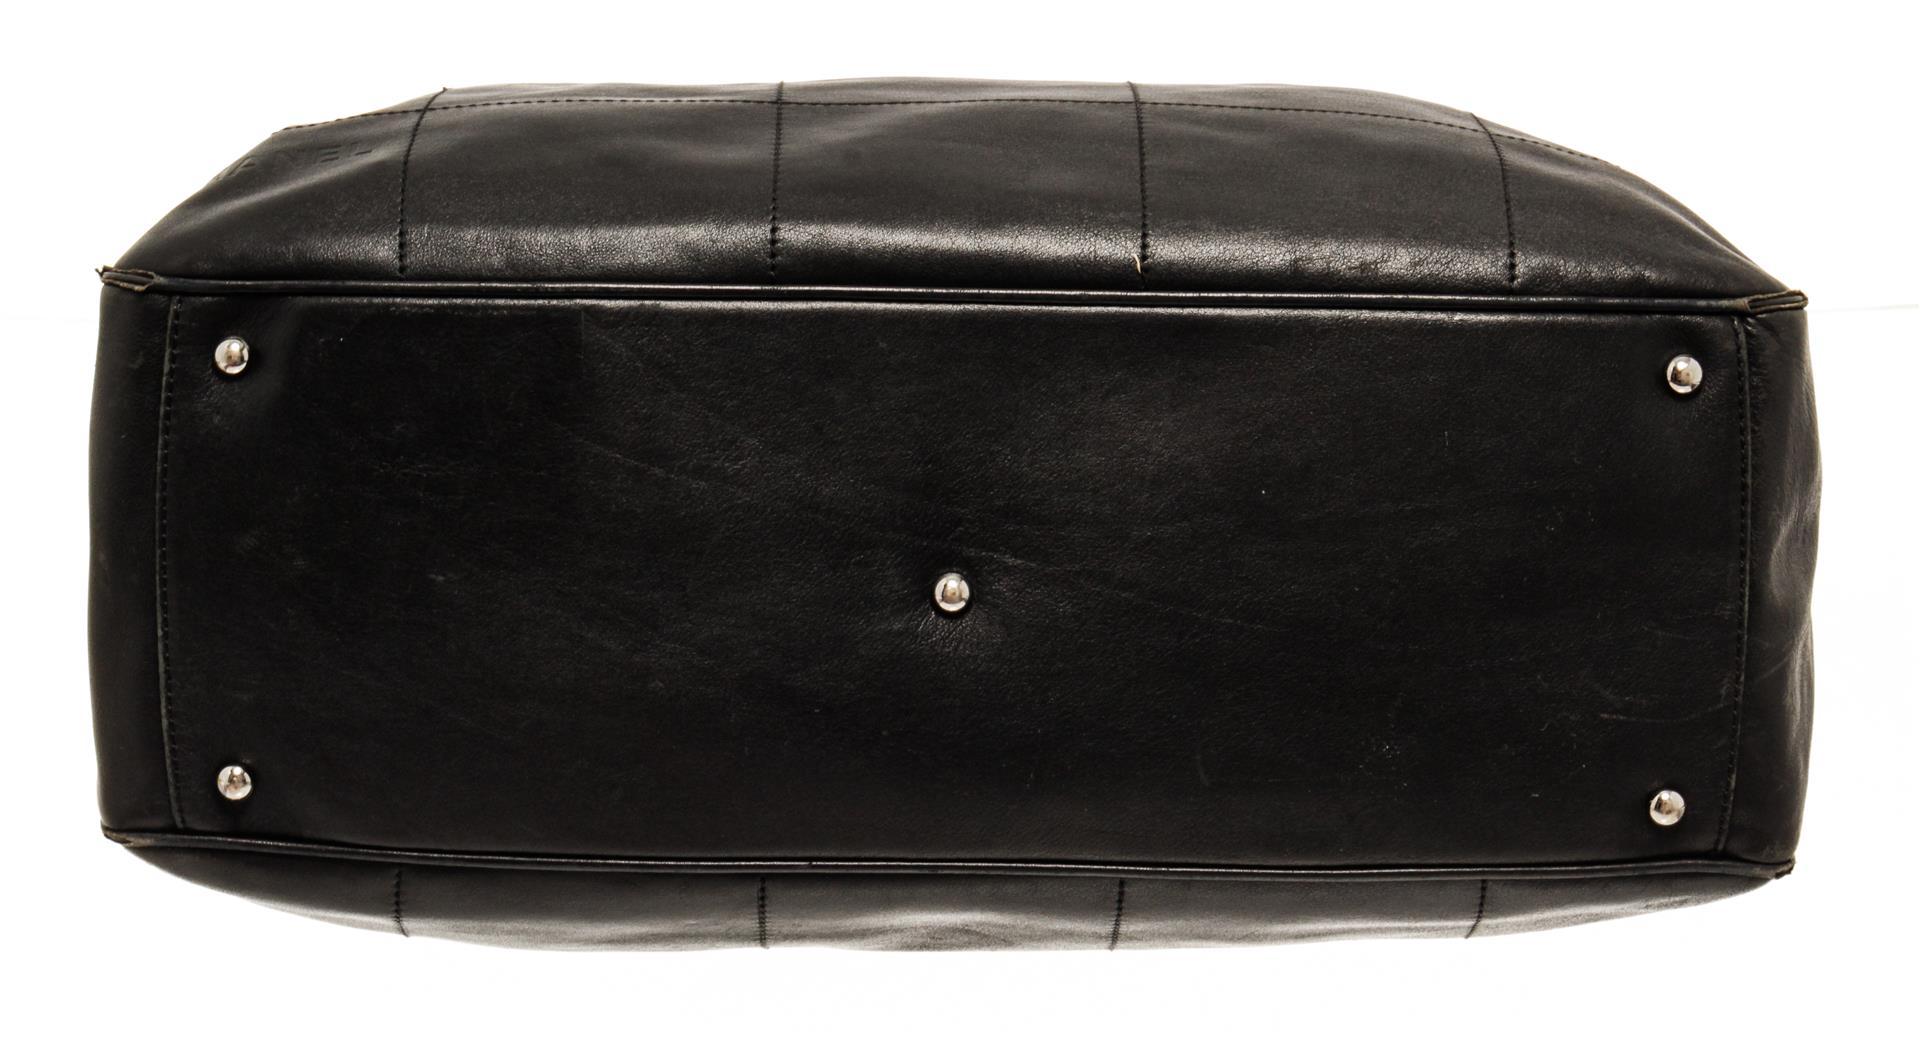 Chanel Black Leather Chocolate Bar Handbag